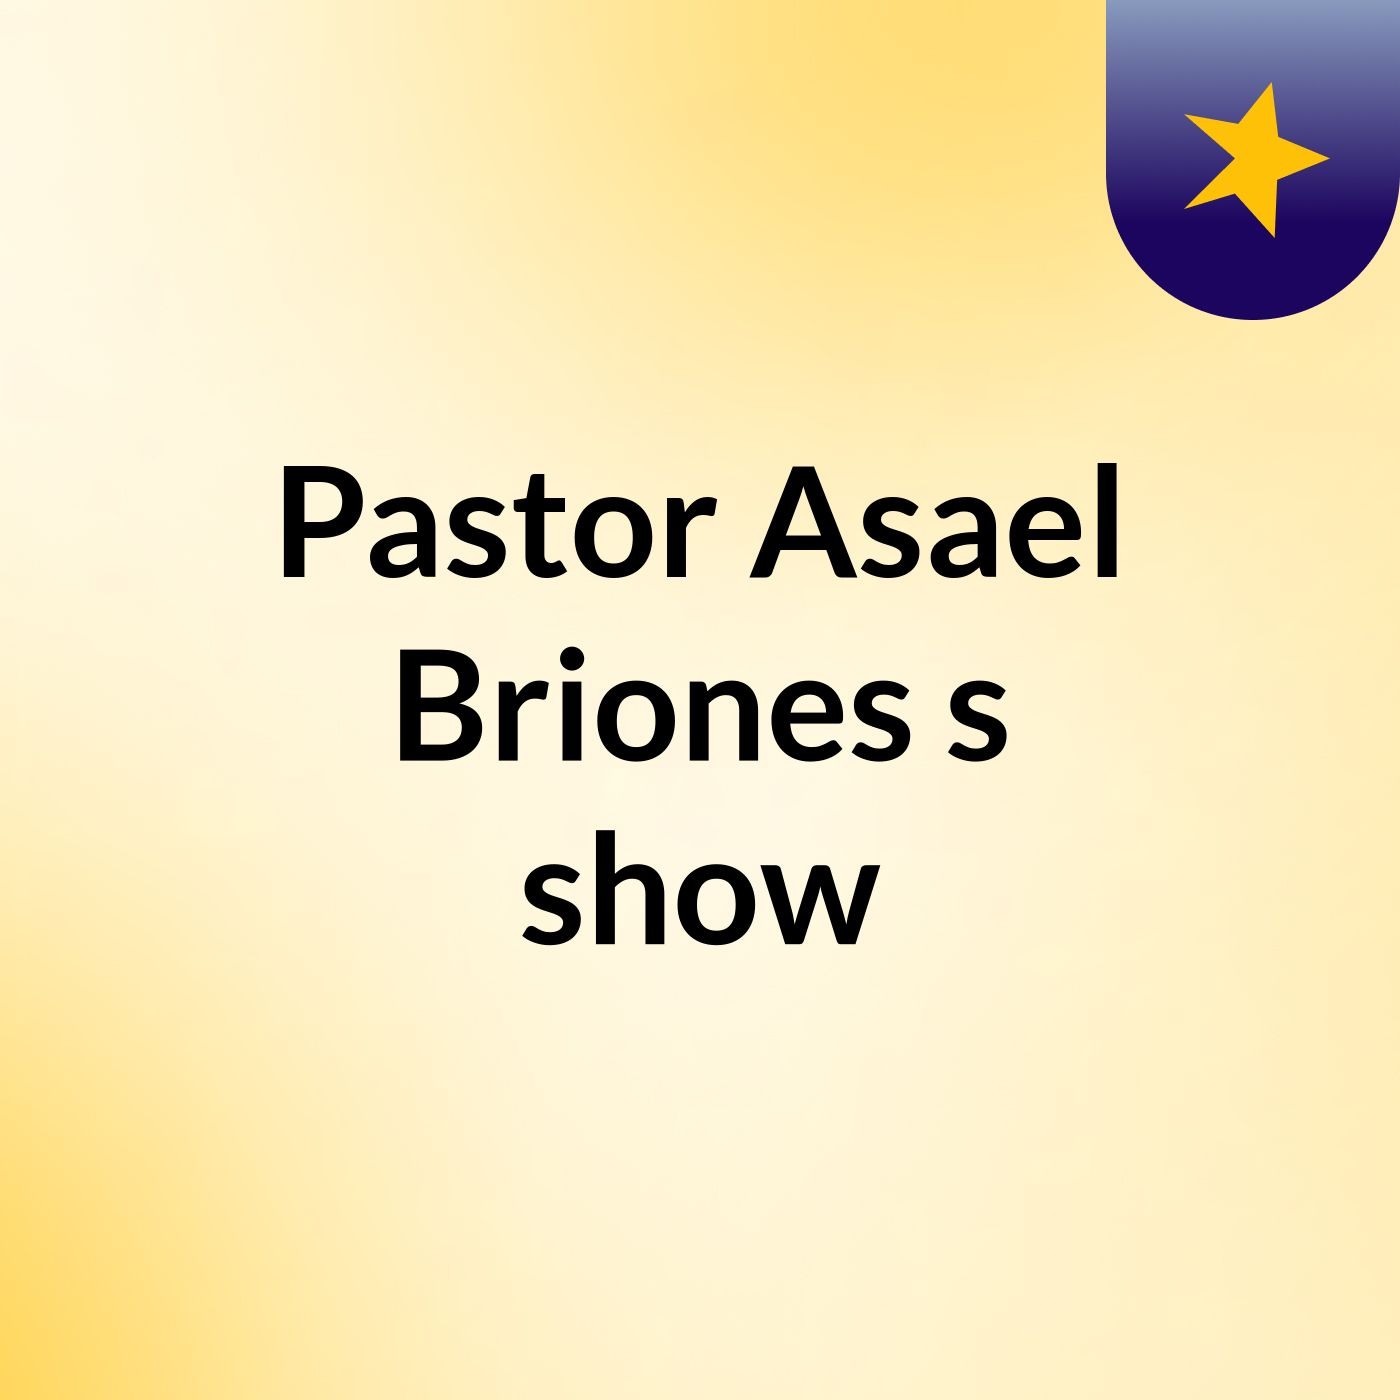 Pastor Asael Briones's show